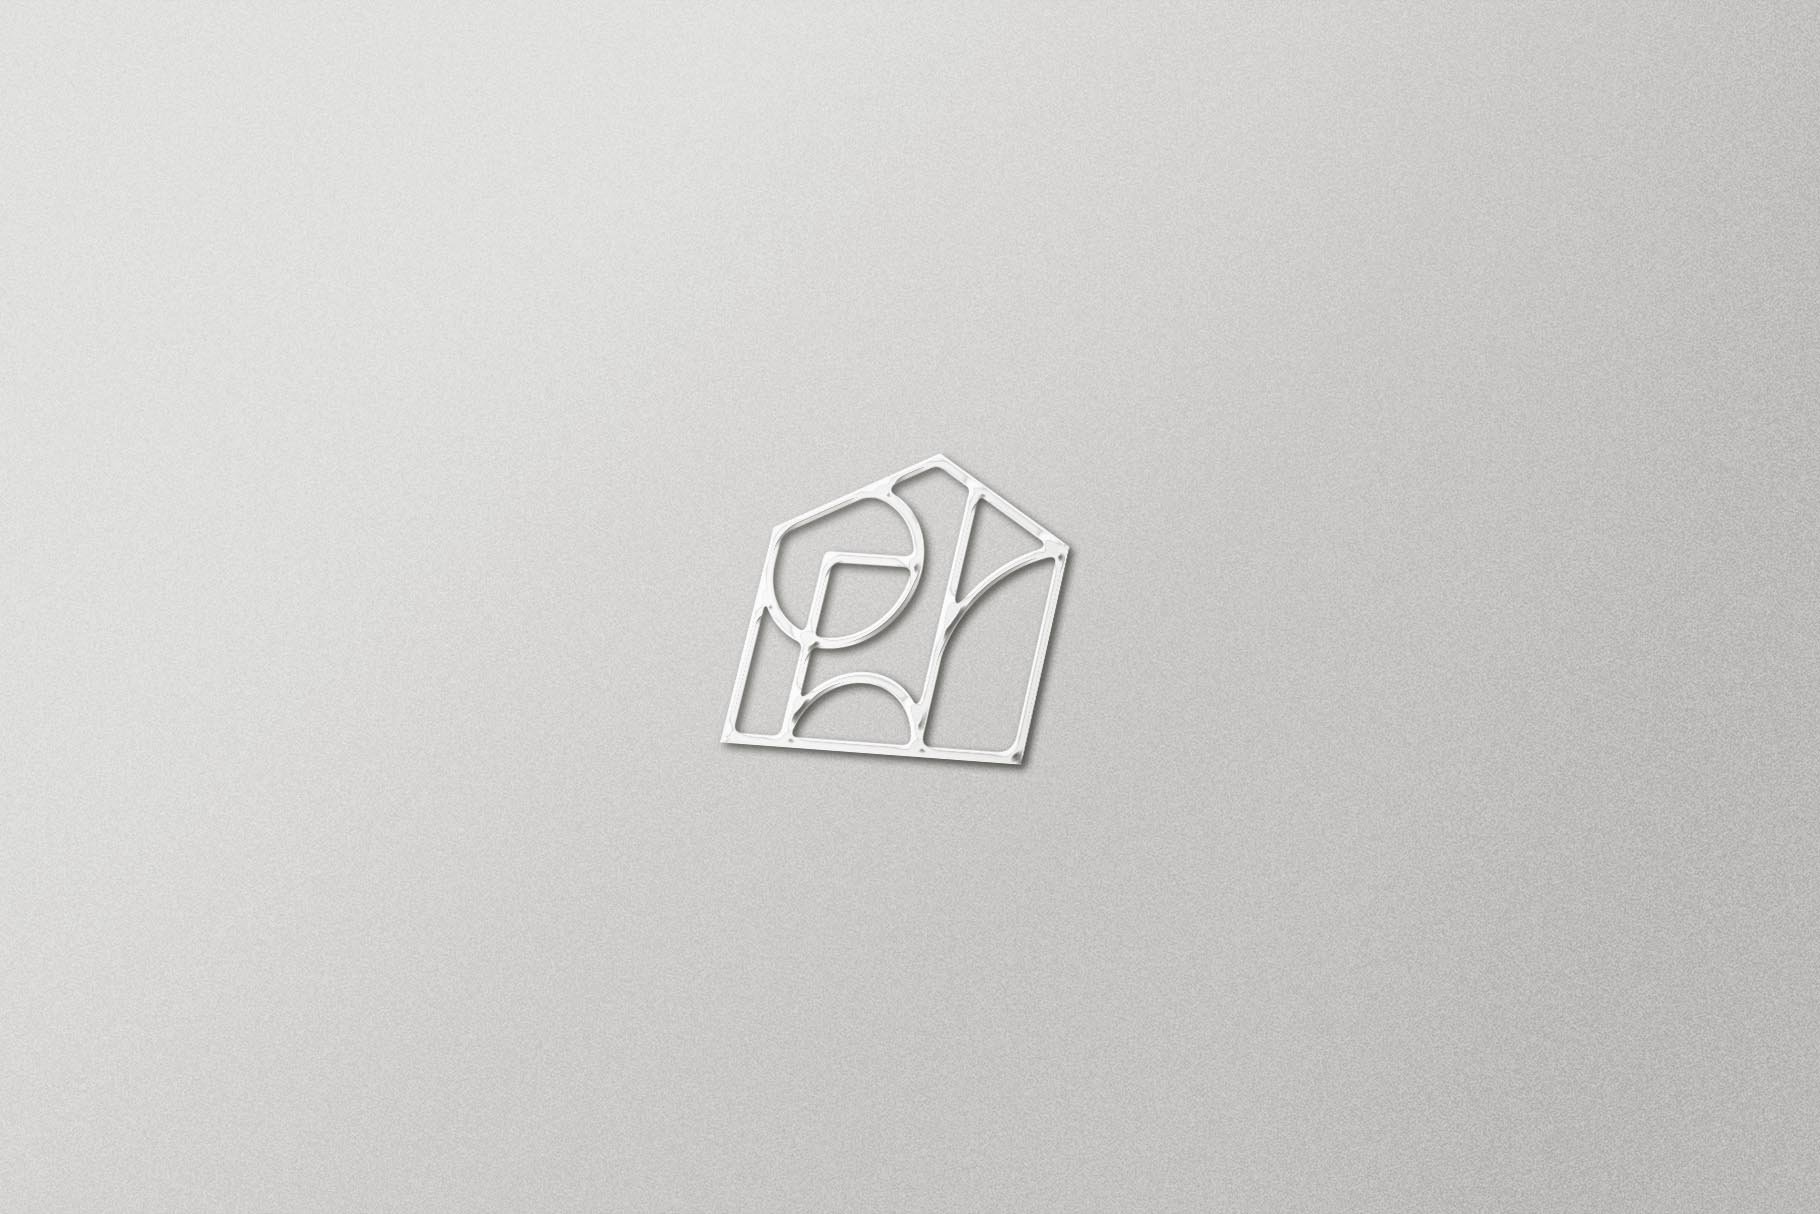 Matte white background with white glance logo.